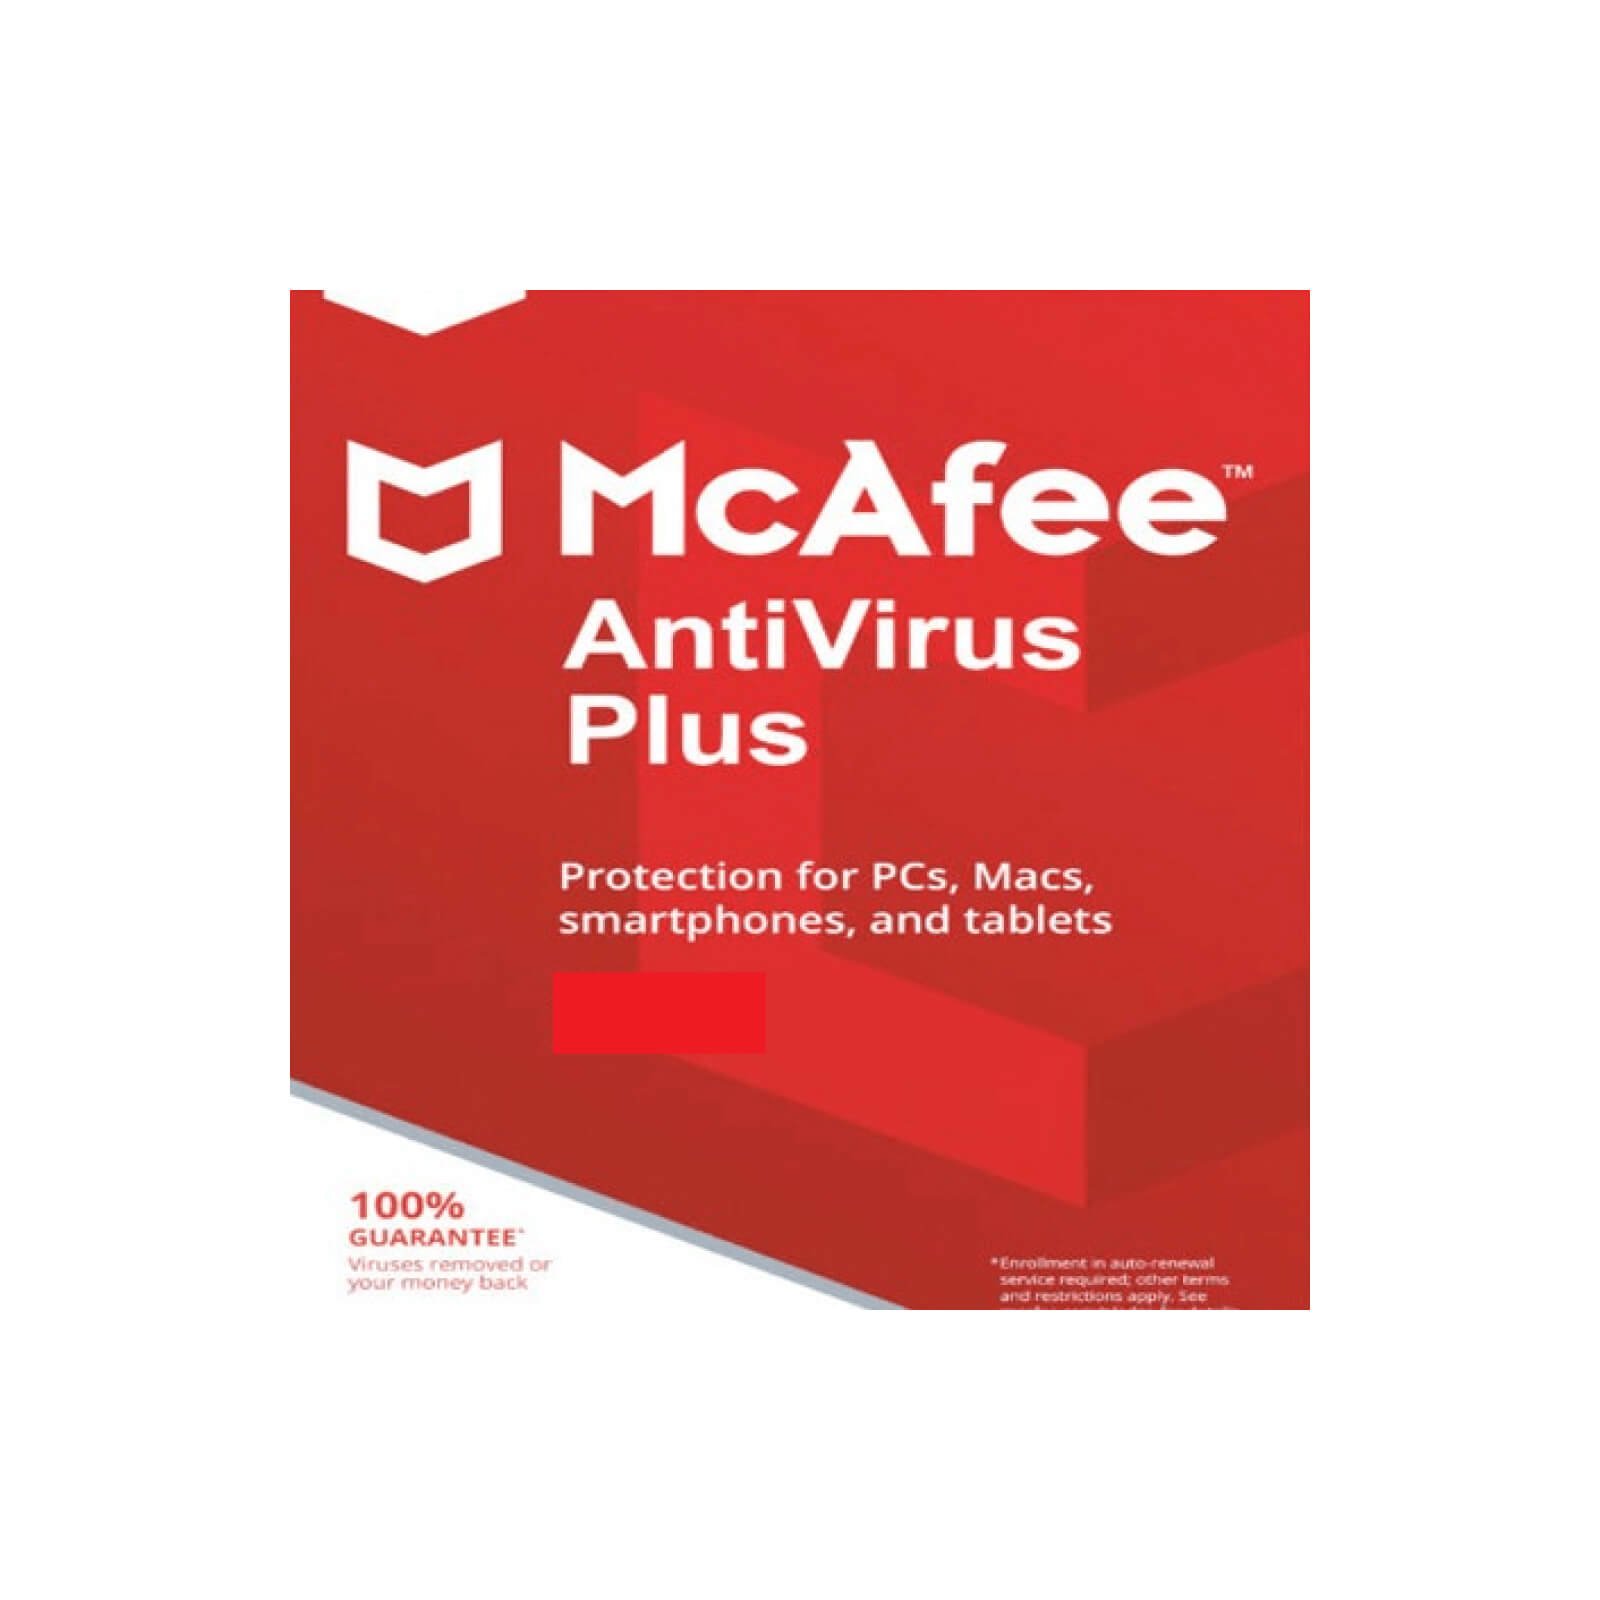 mcafee antivirus software